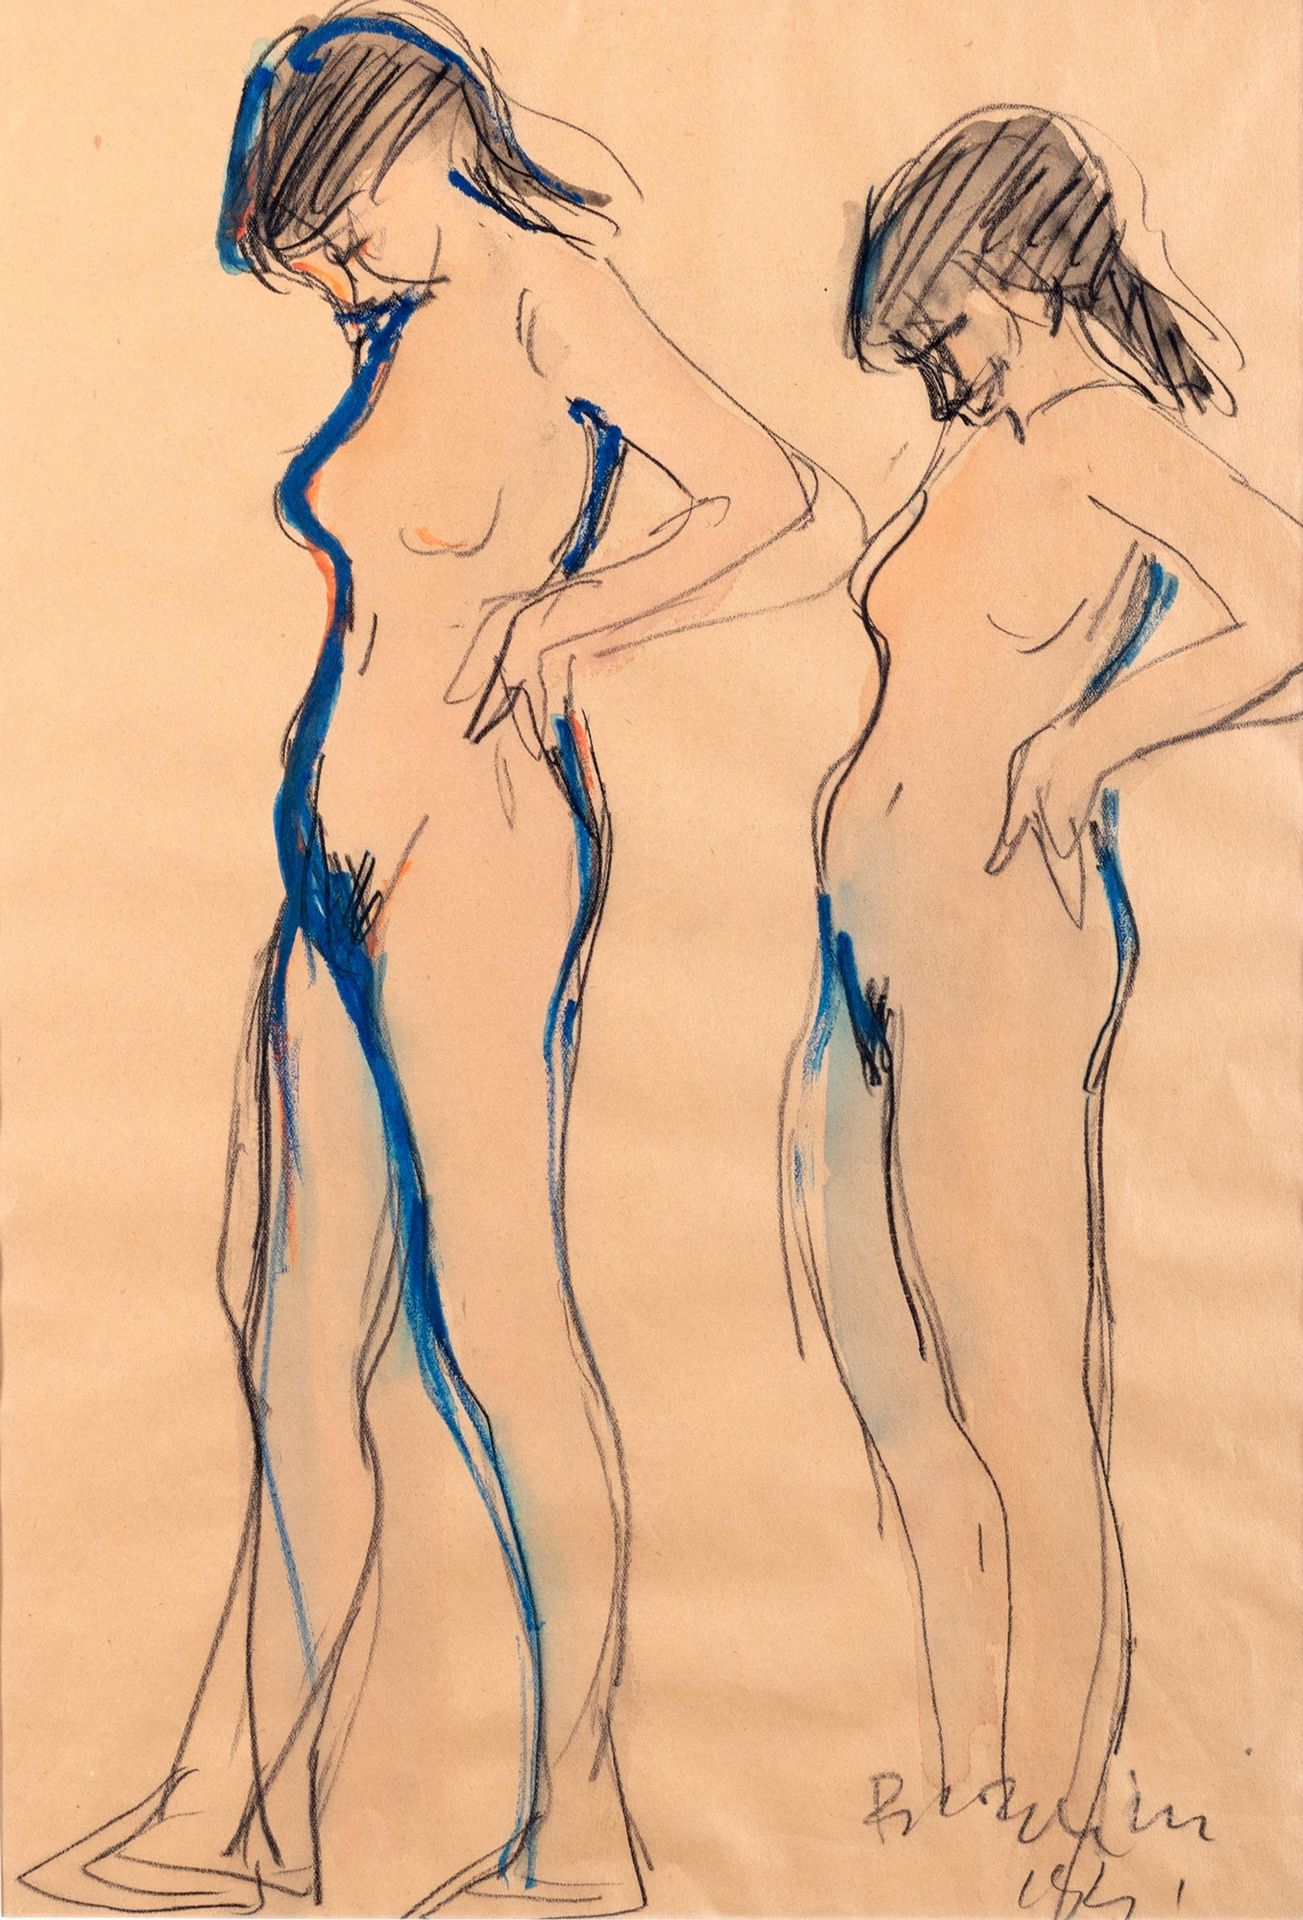 Luigi Broggini 裸体研究，1941年

纸上混合媒体
42.5 x 29.5 cm
右下角签名：Broggini 1941
本拍品受艺术家转售权的&hellip;